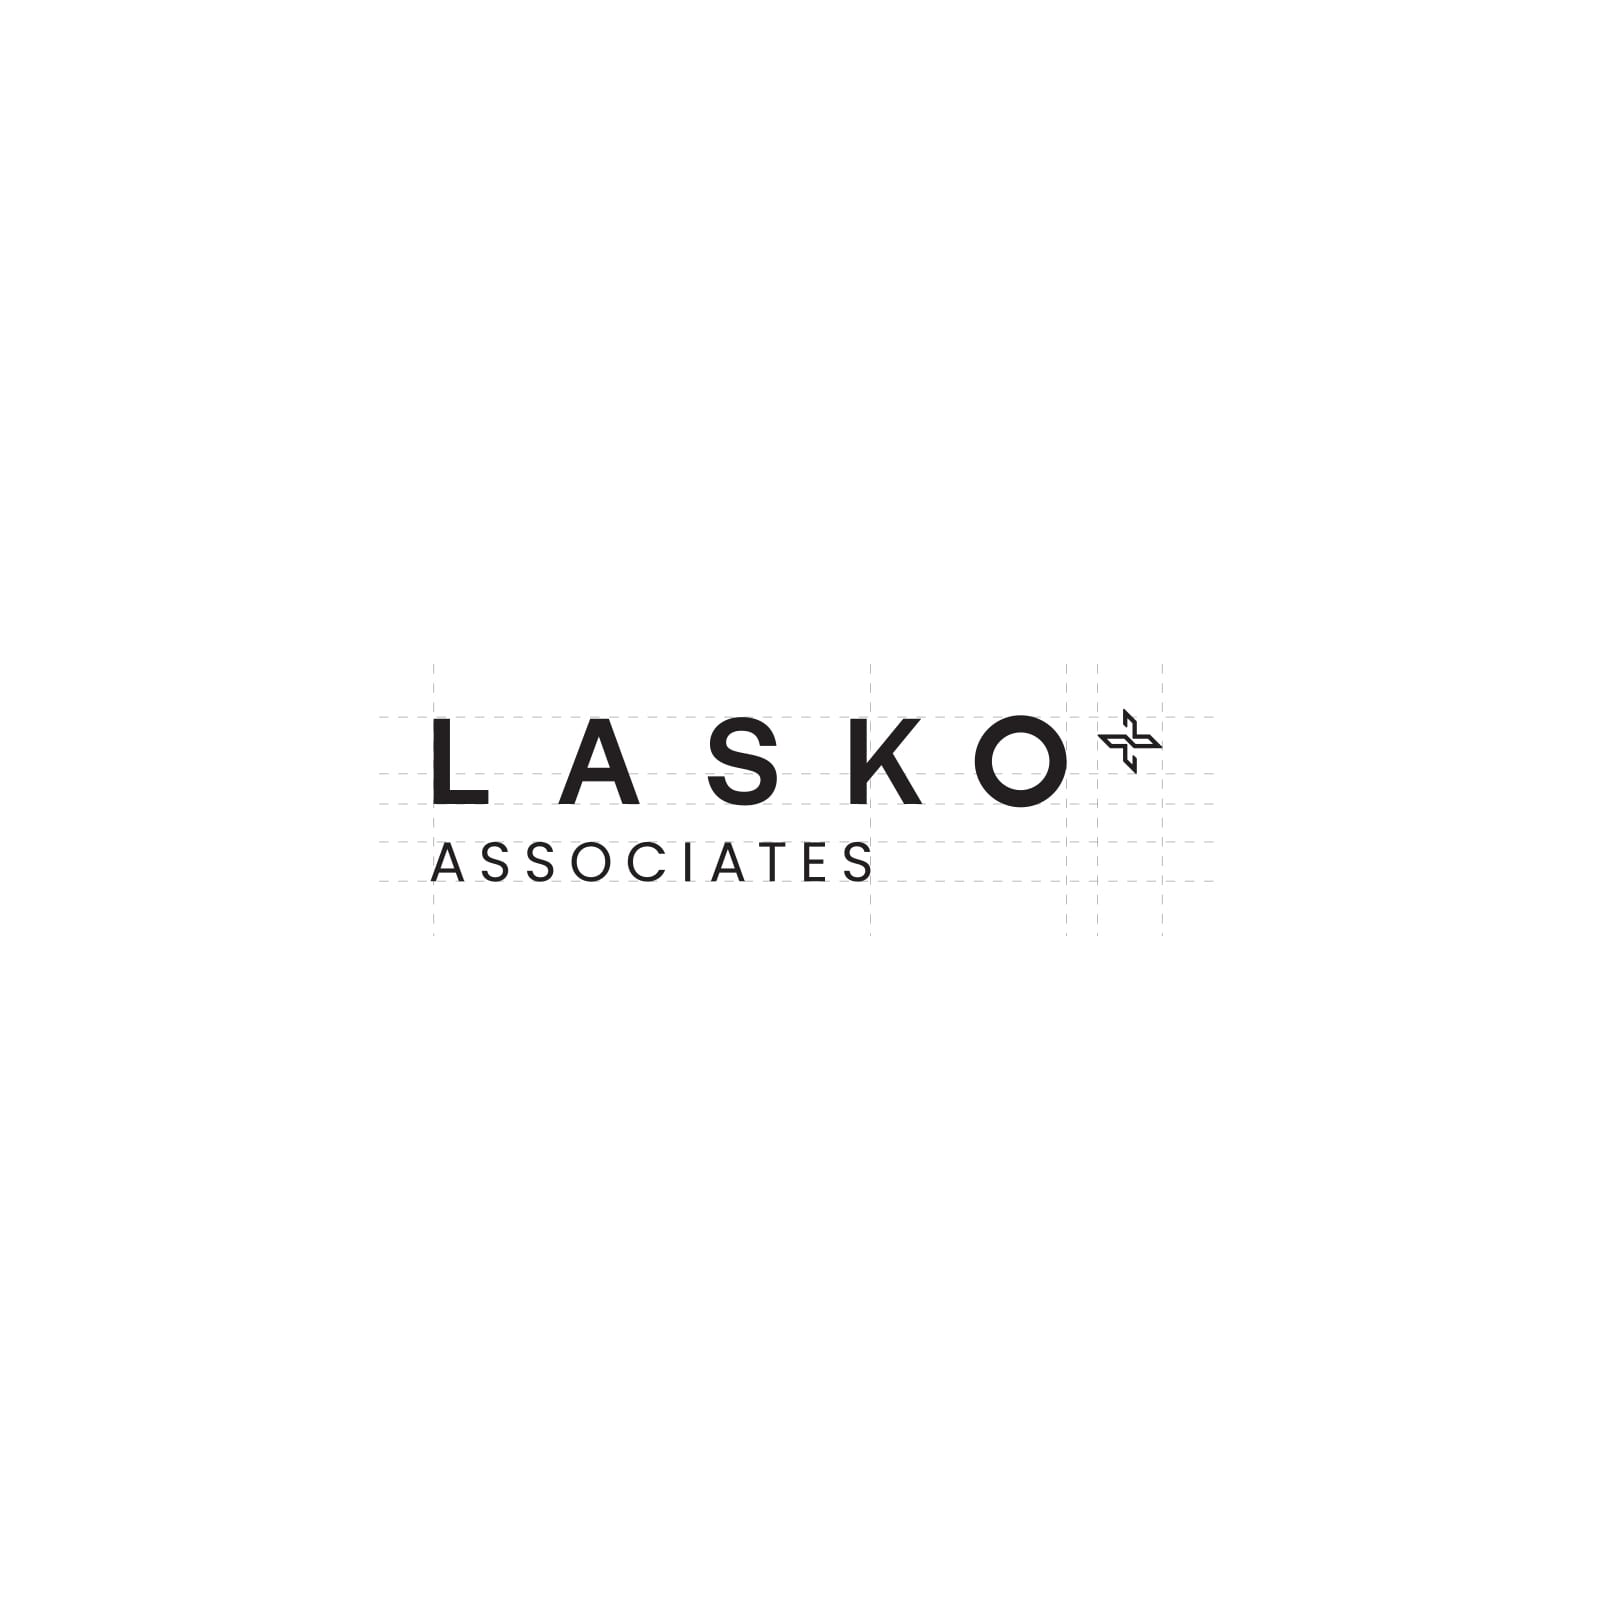 Y5 Creative Case Studies Lasko Associates Work Process 1